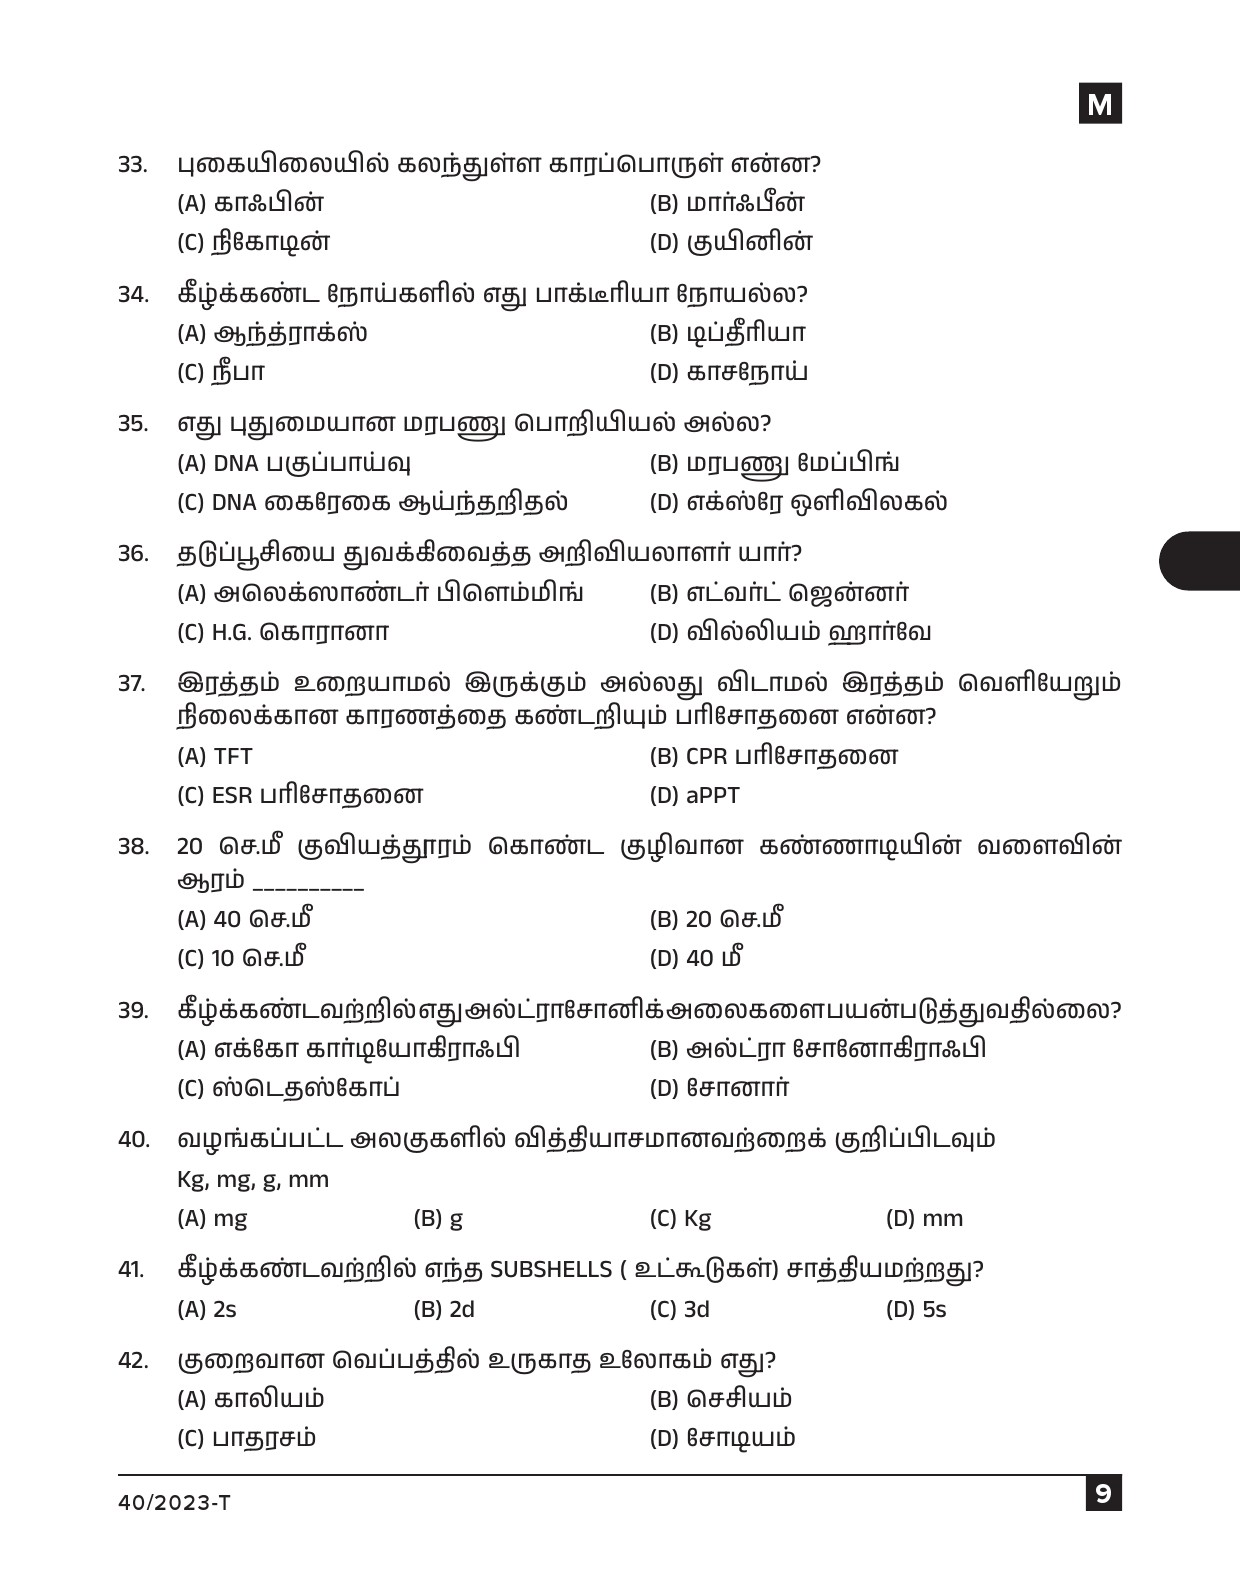 KPSC Data Entry Operator Tamil Exam 2023 Code 0402023 T 8